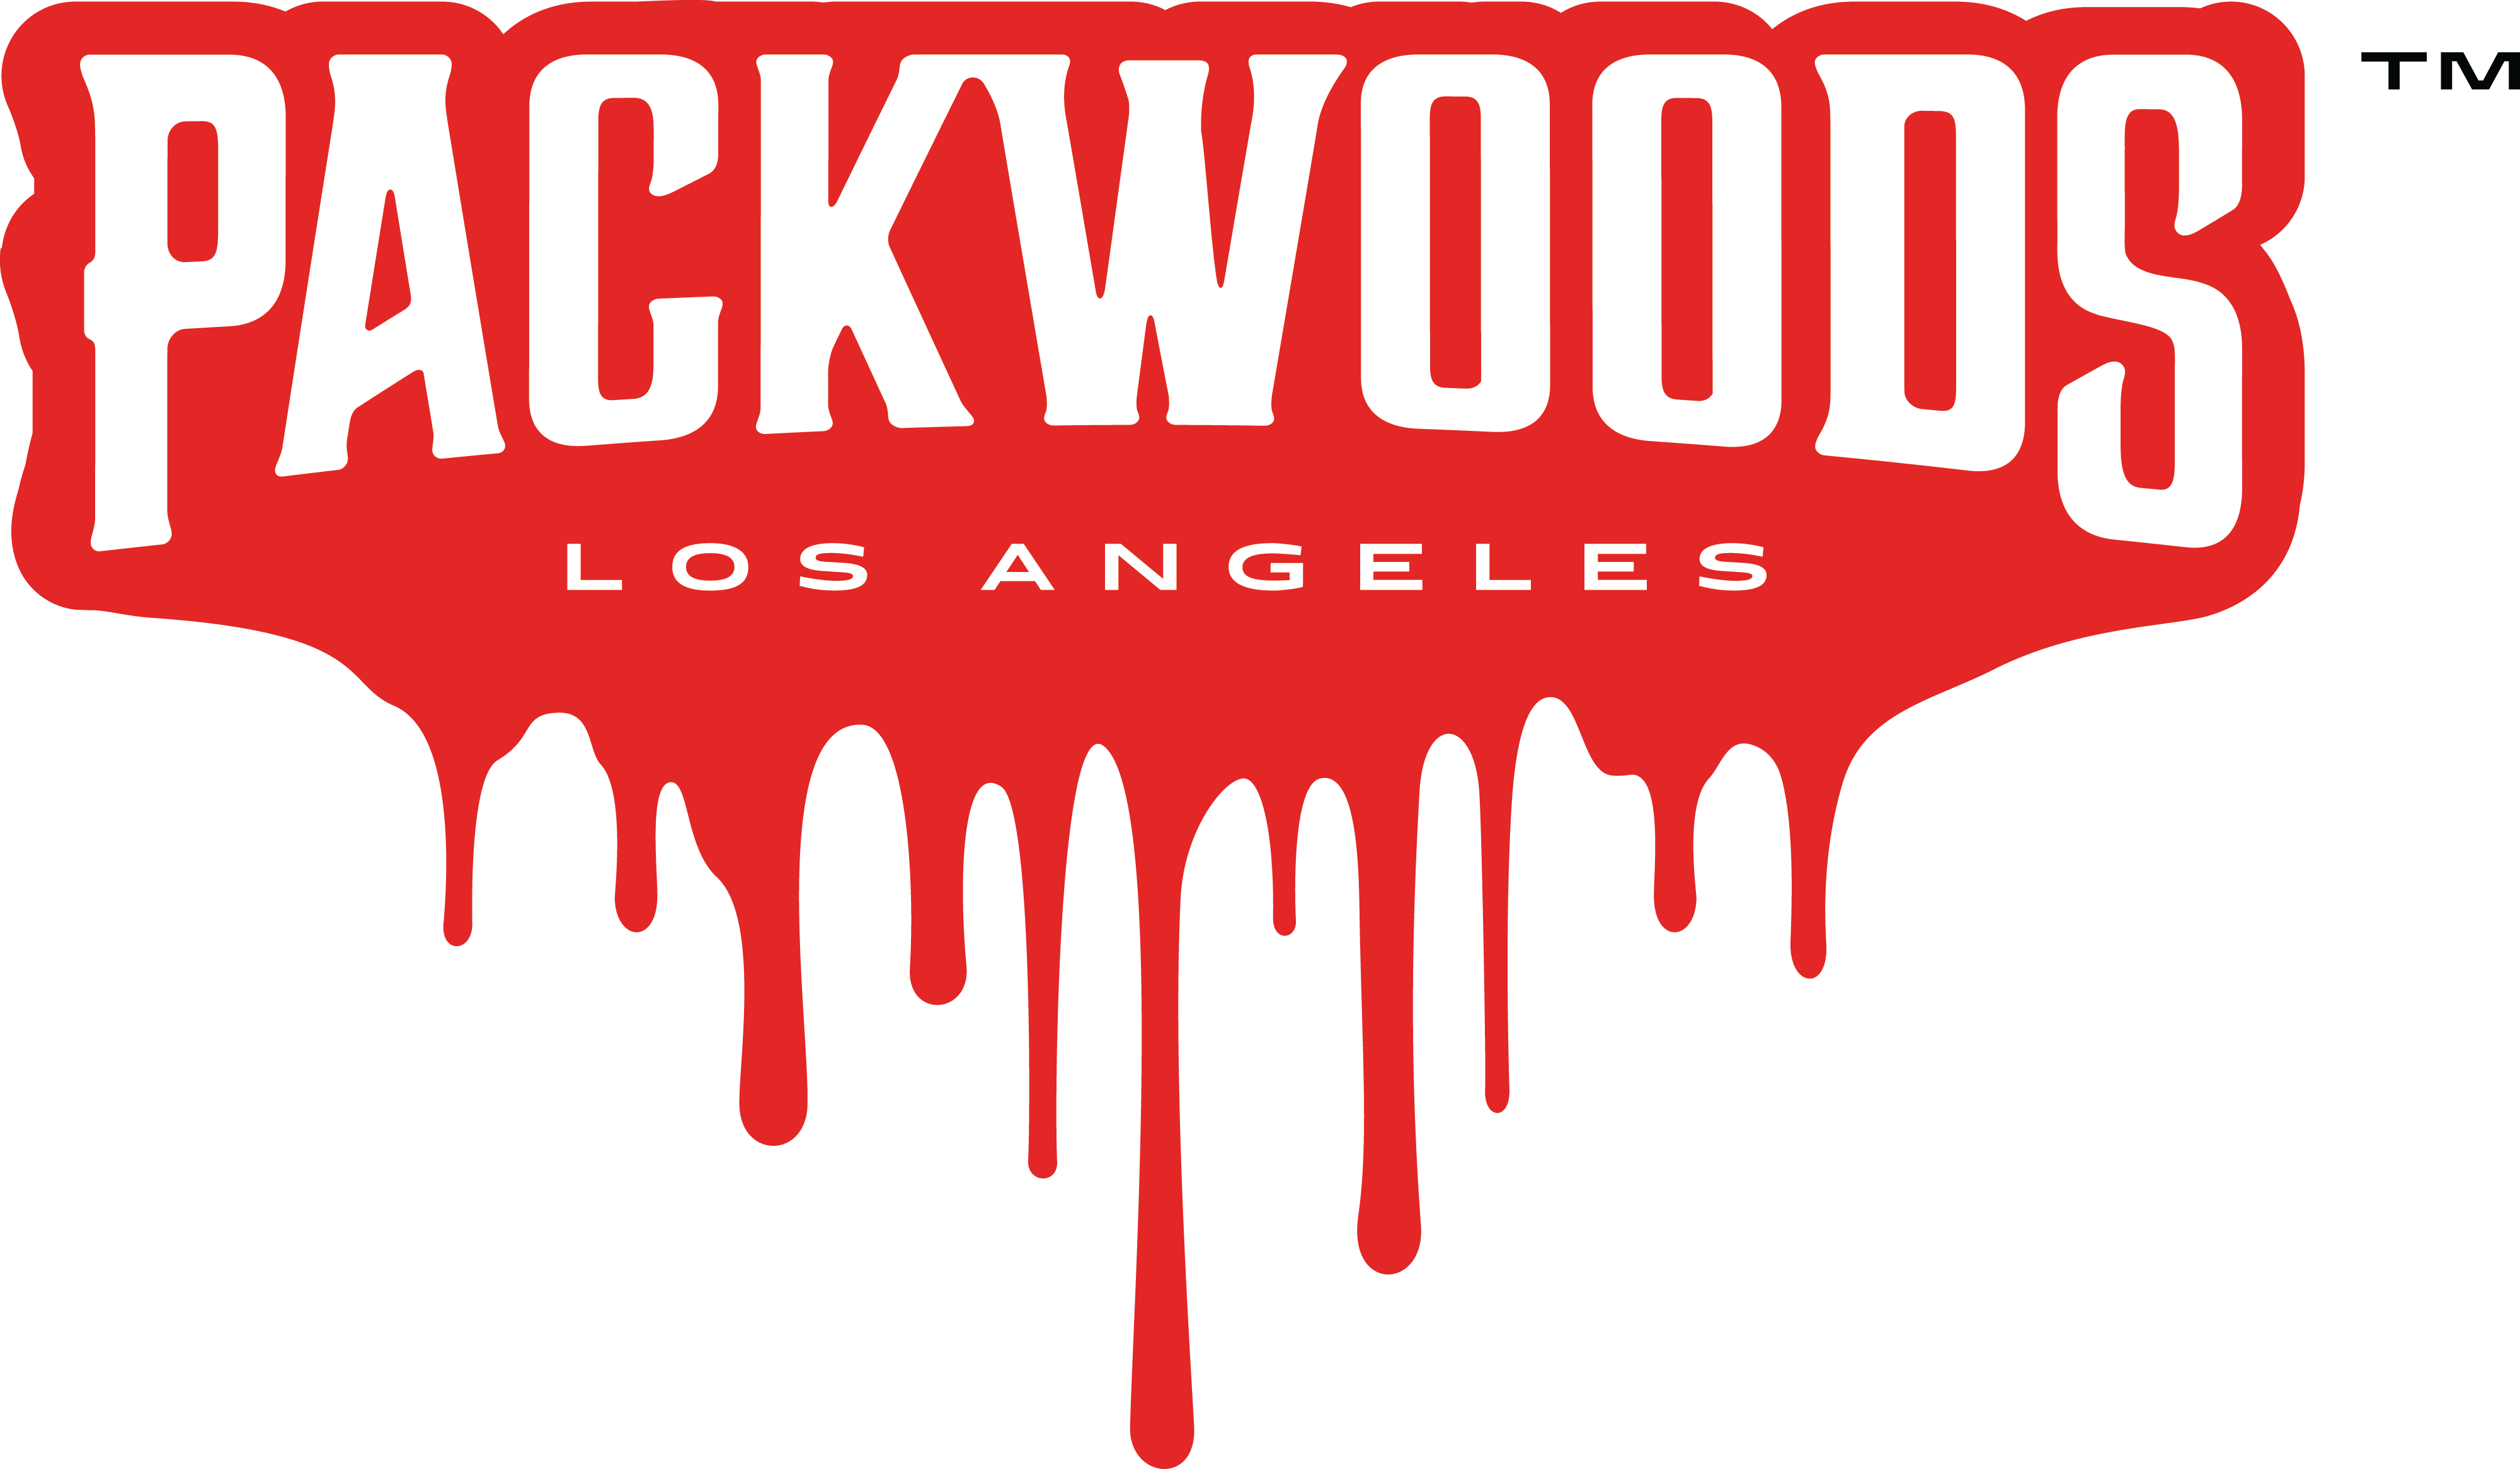 Packwoods Cannabis Brand Logo